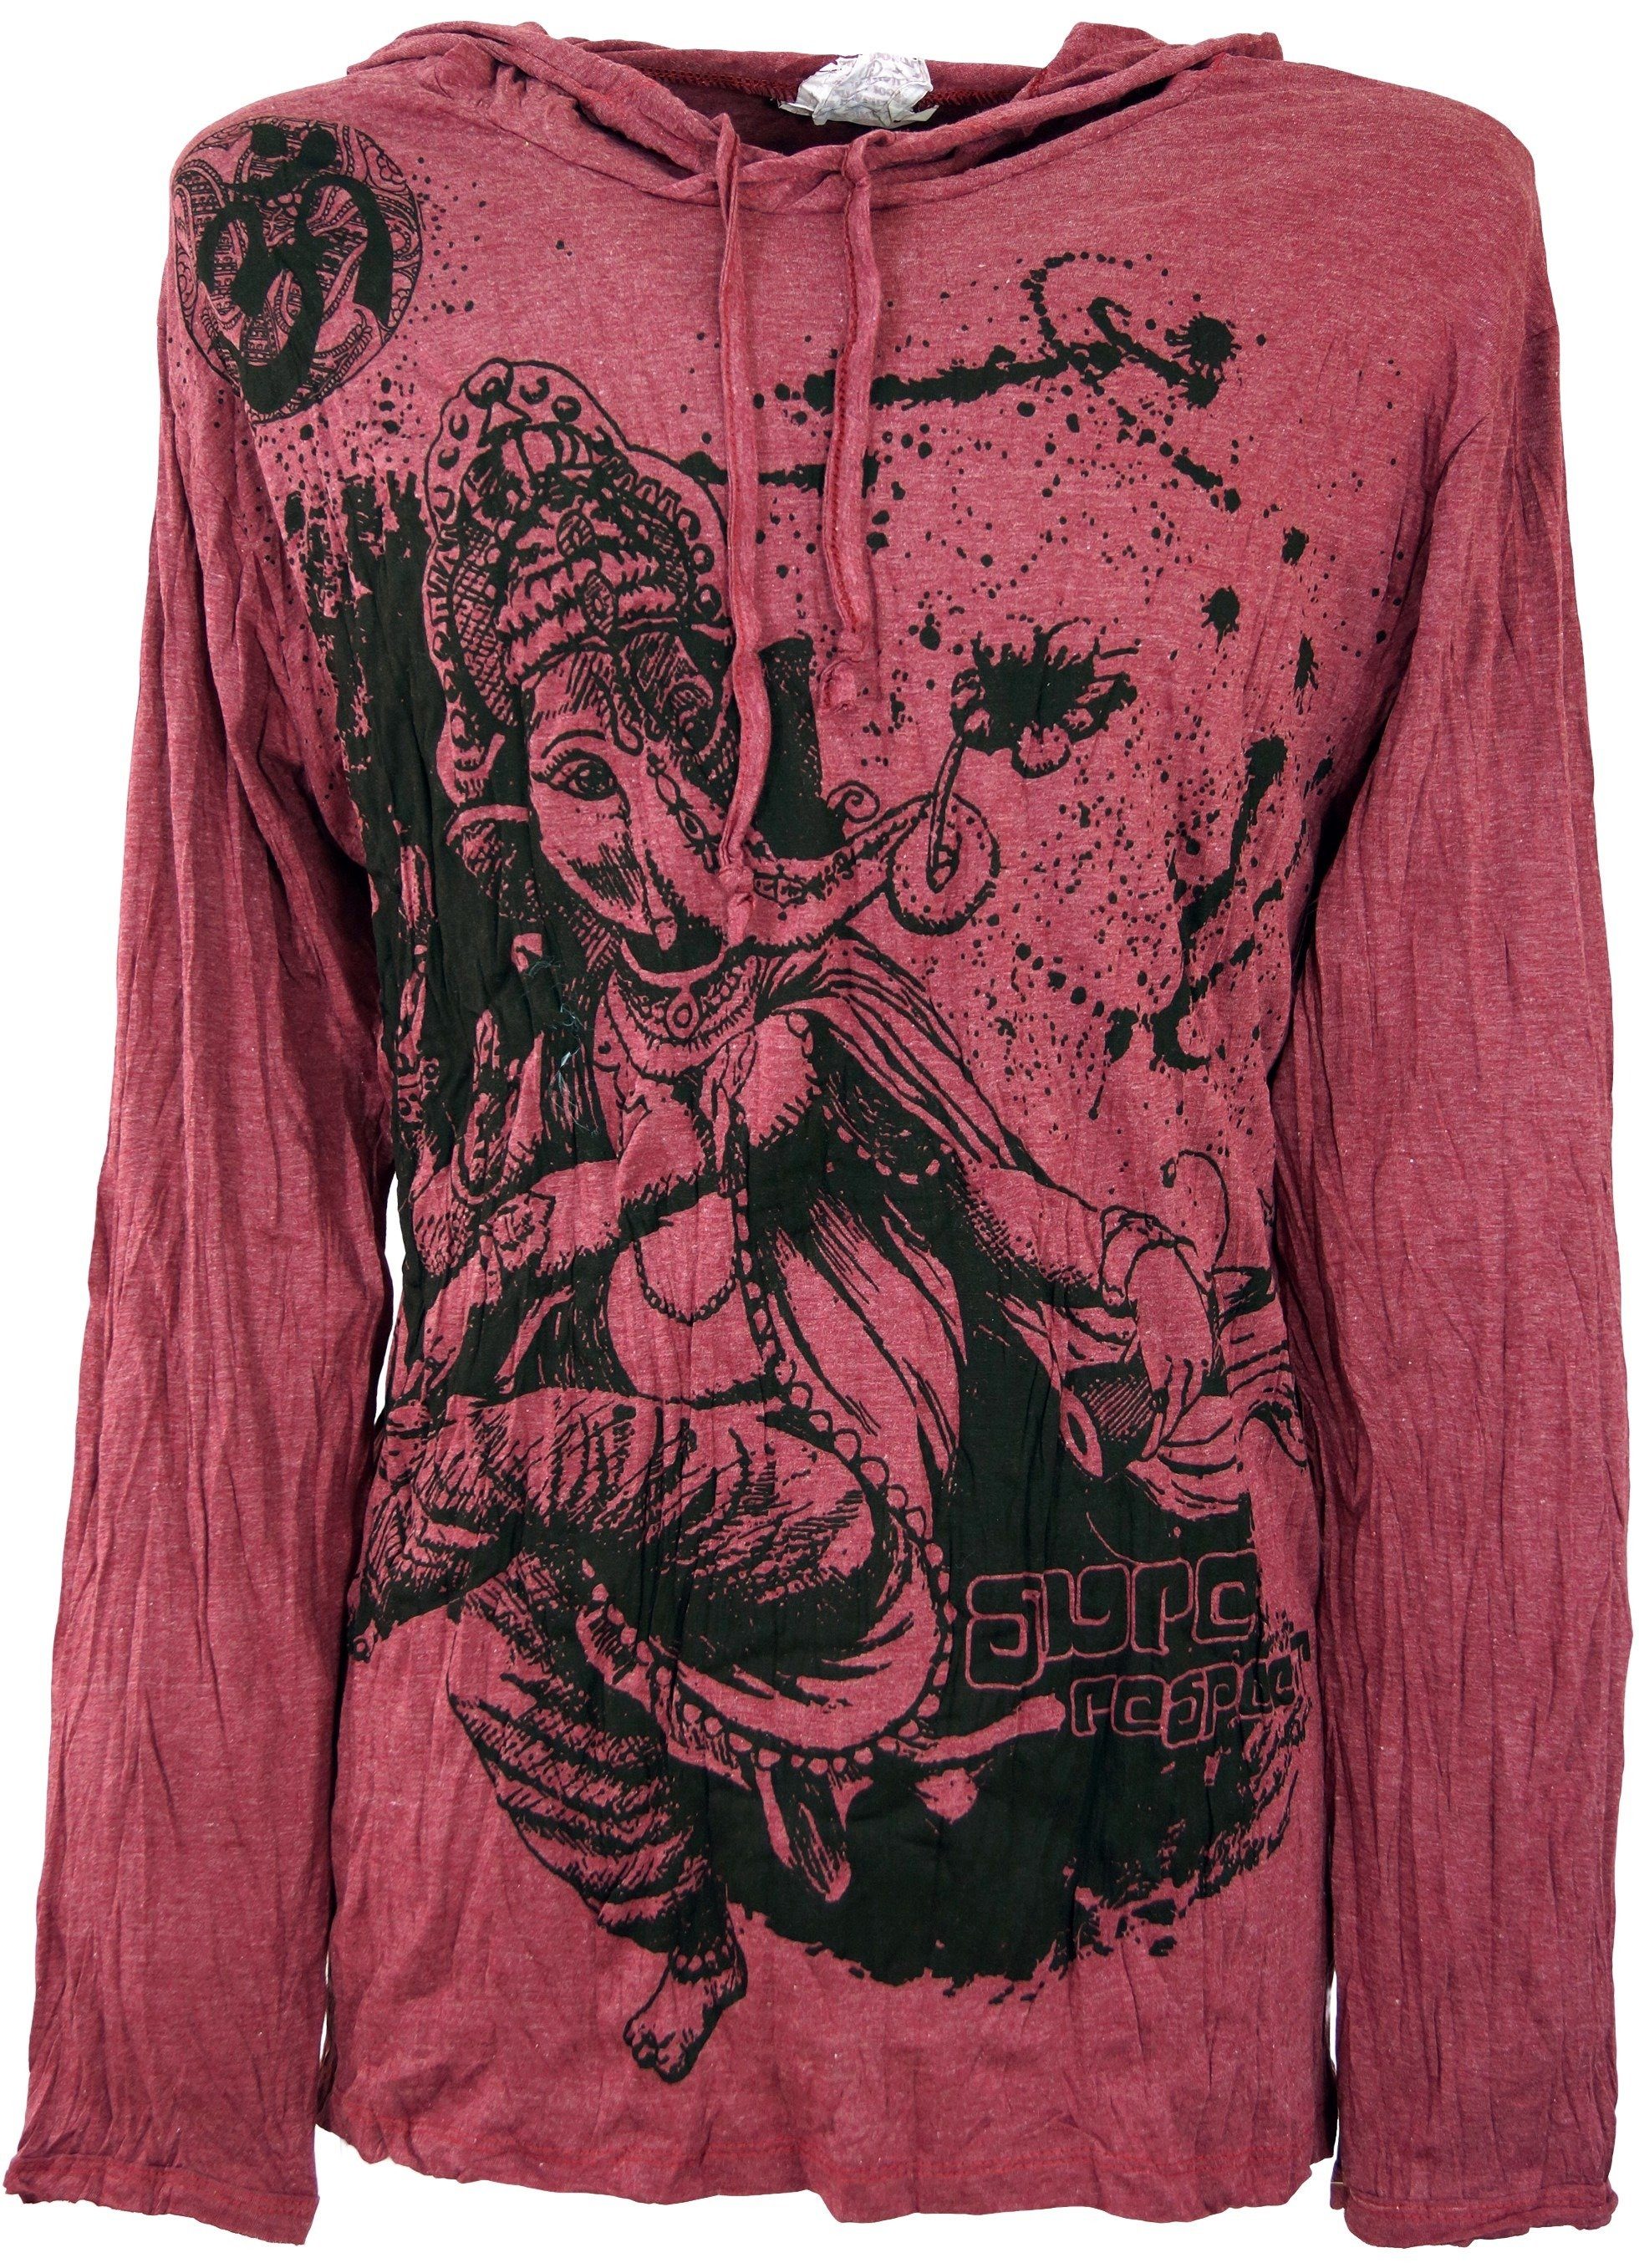 Guru-Shop T-Shirt Sure Langarmshirt, Kapuzenshirt Dancing Ganesh.. Goa Style, Festival, alternative Bekleidung bordeaux